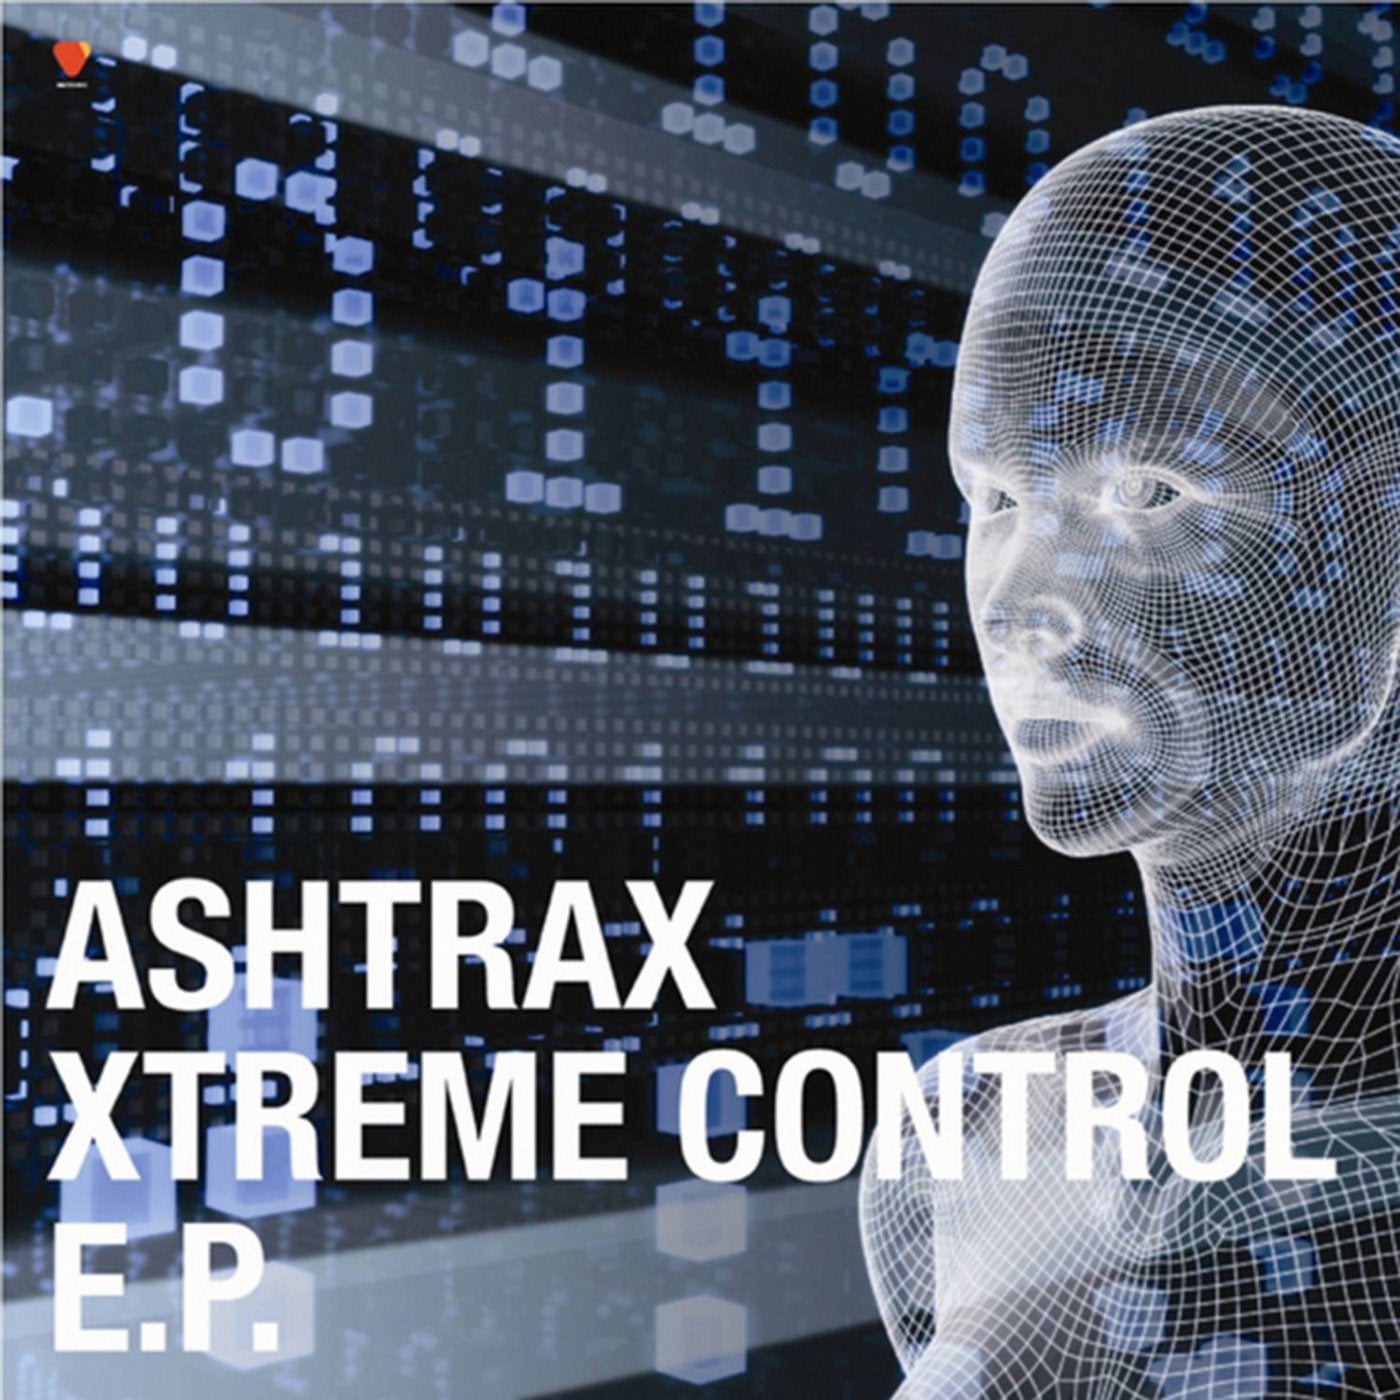 Xtreme Control